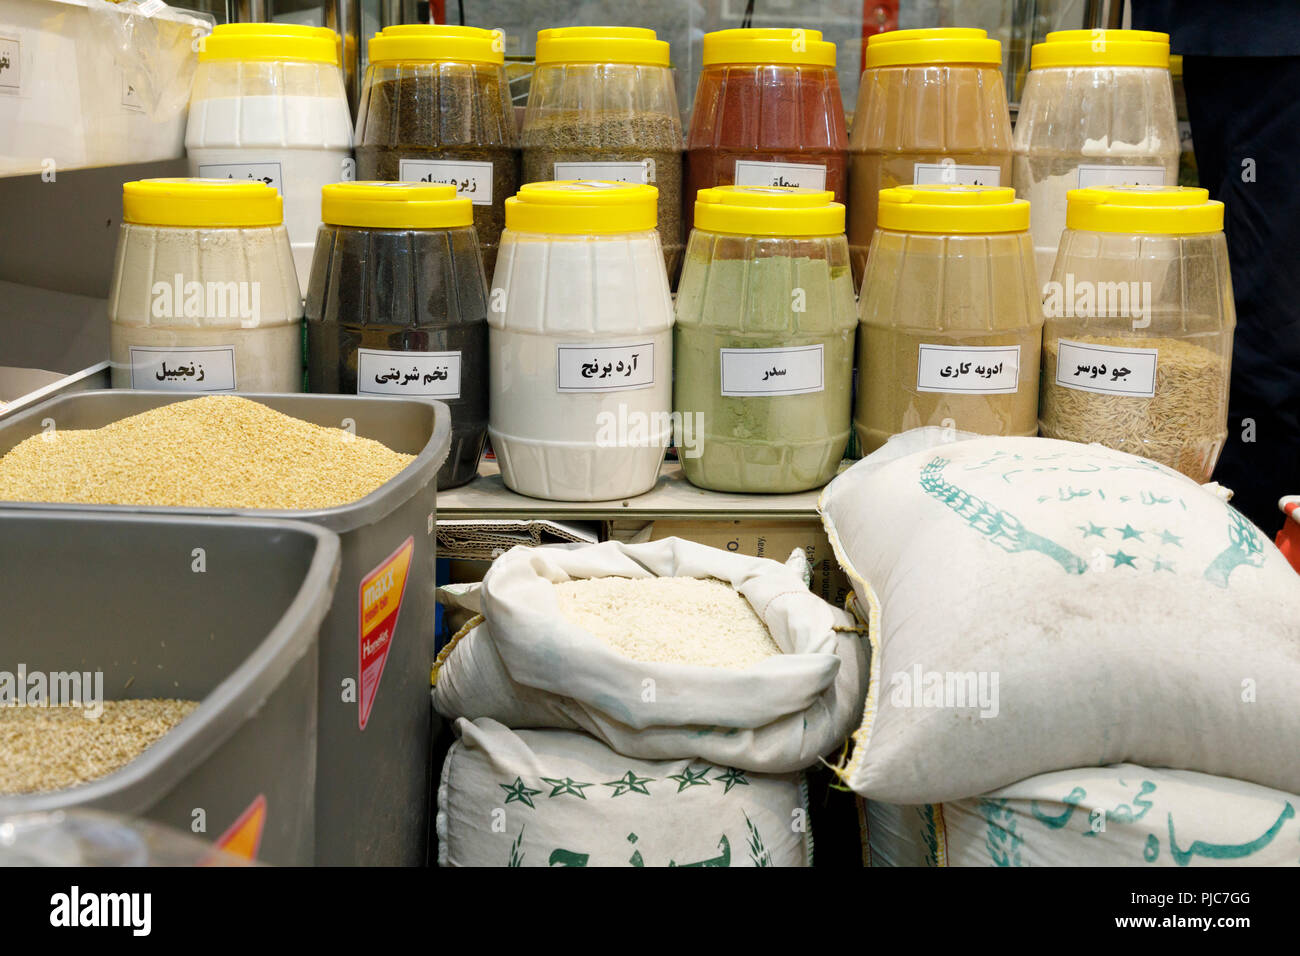 Islamic Republic of Iran. Tehran Bazaar. Household items or spices or grains. Stock Photo